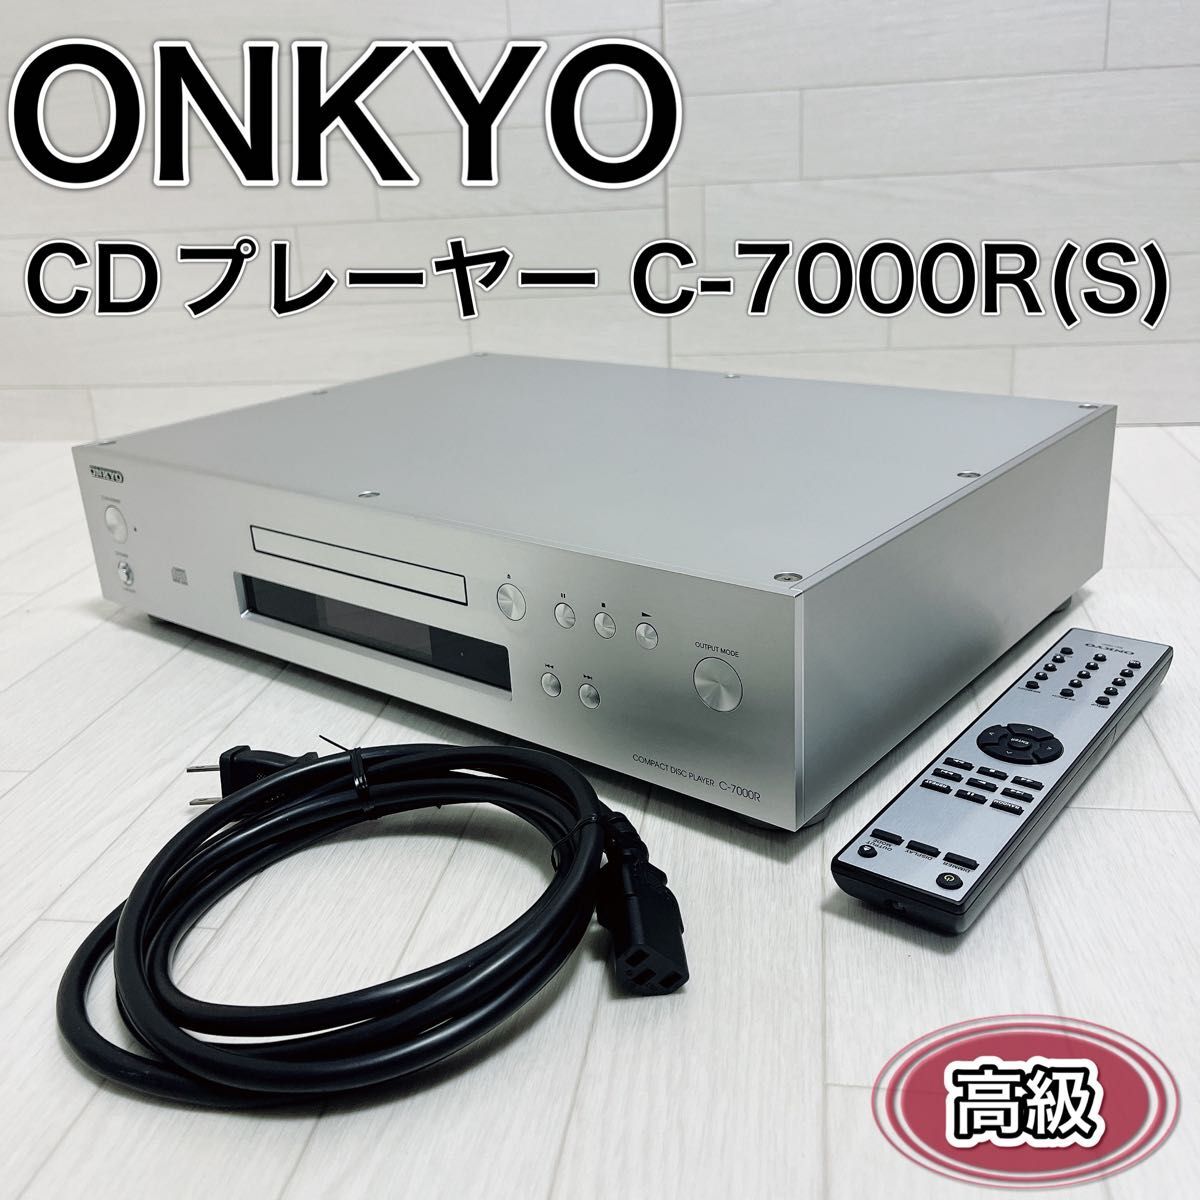 ONKYO CDプレーヤー C-7000R(S) リモコン付き 最高峰 良品